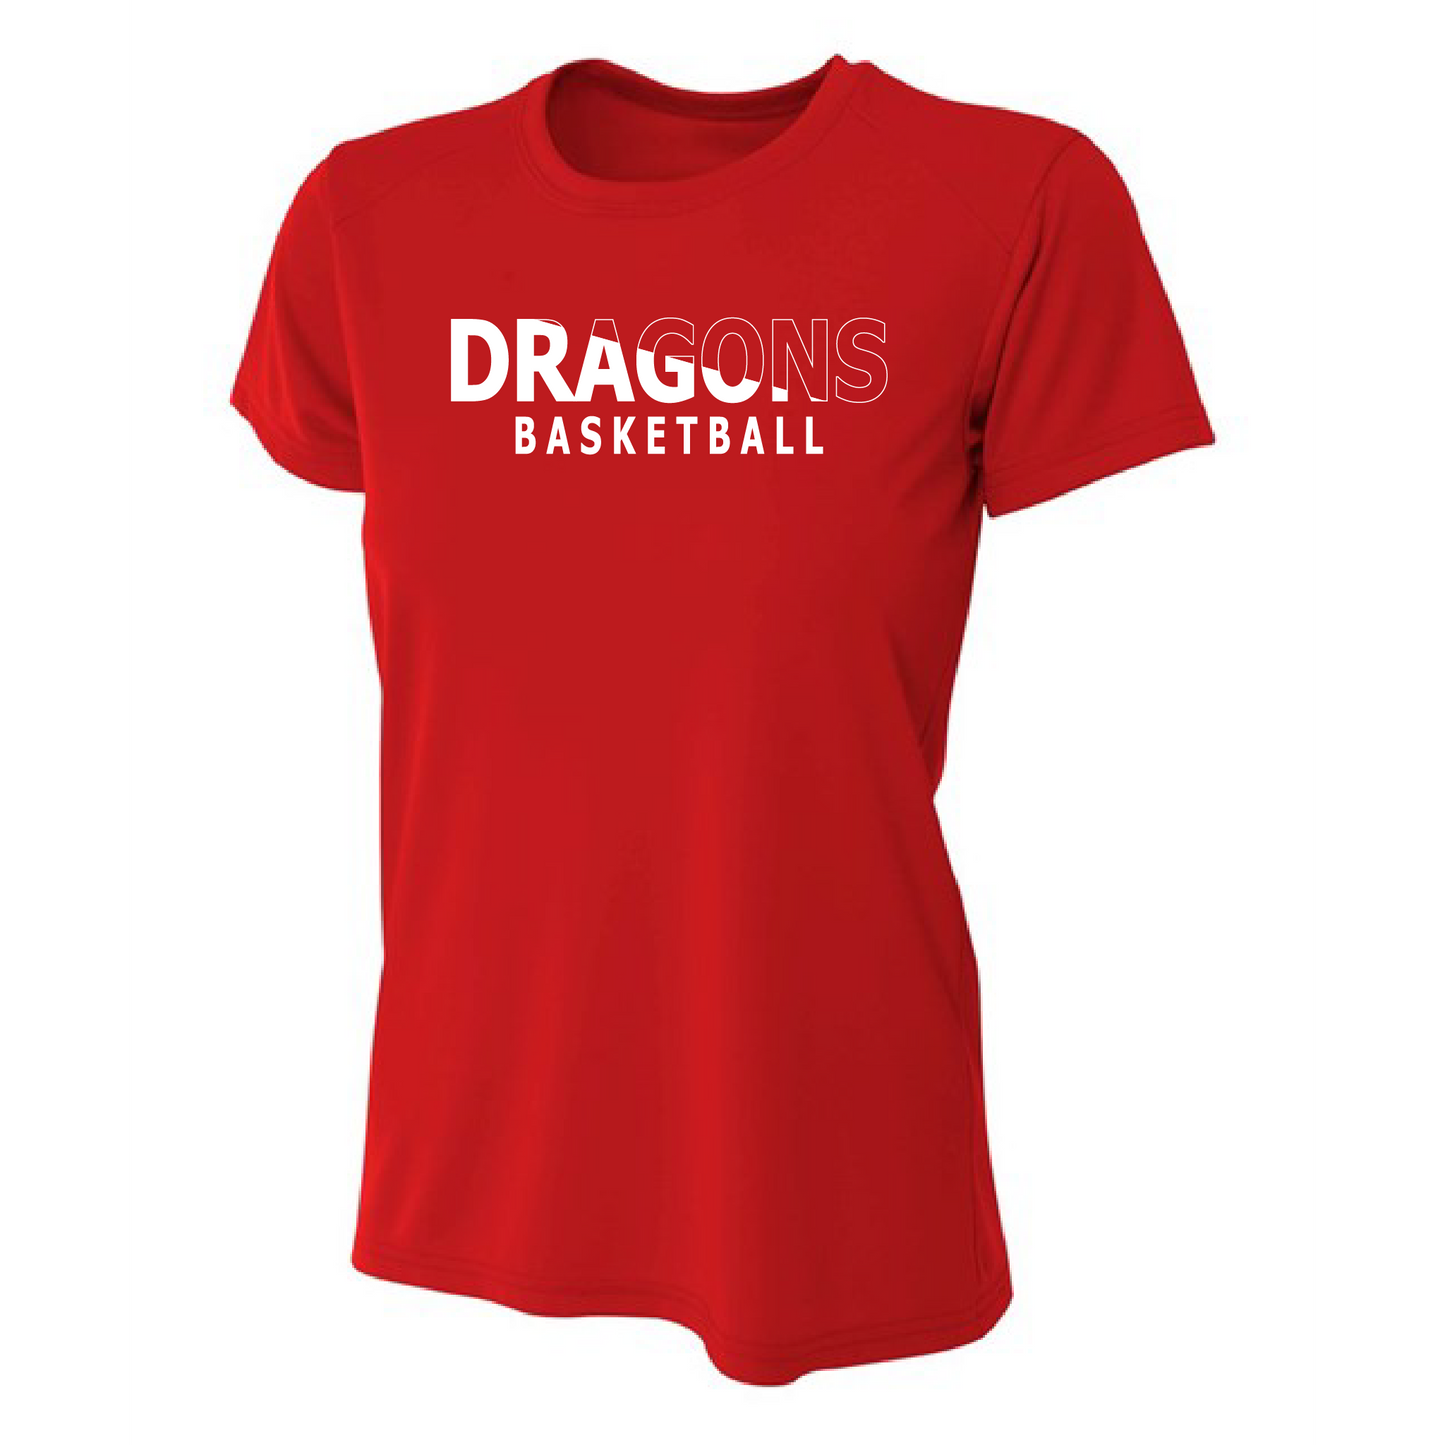 Womens S/S T-Shirt - White Dragons Basketball Slashed